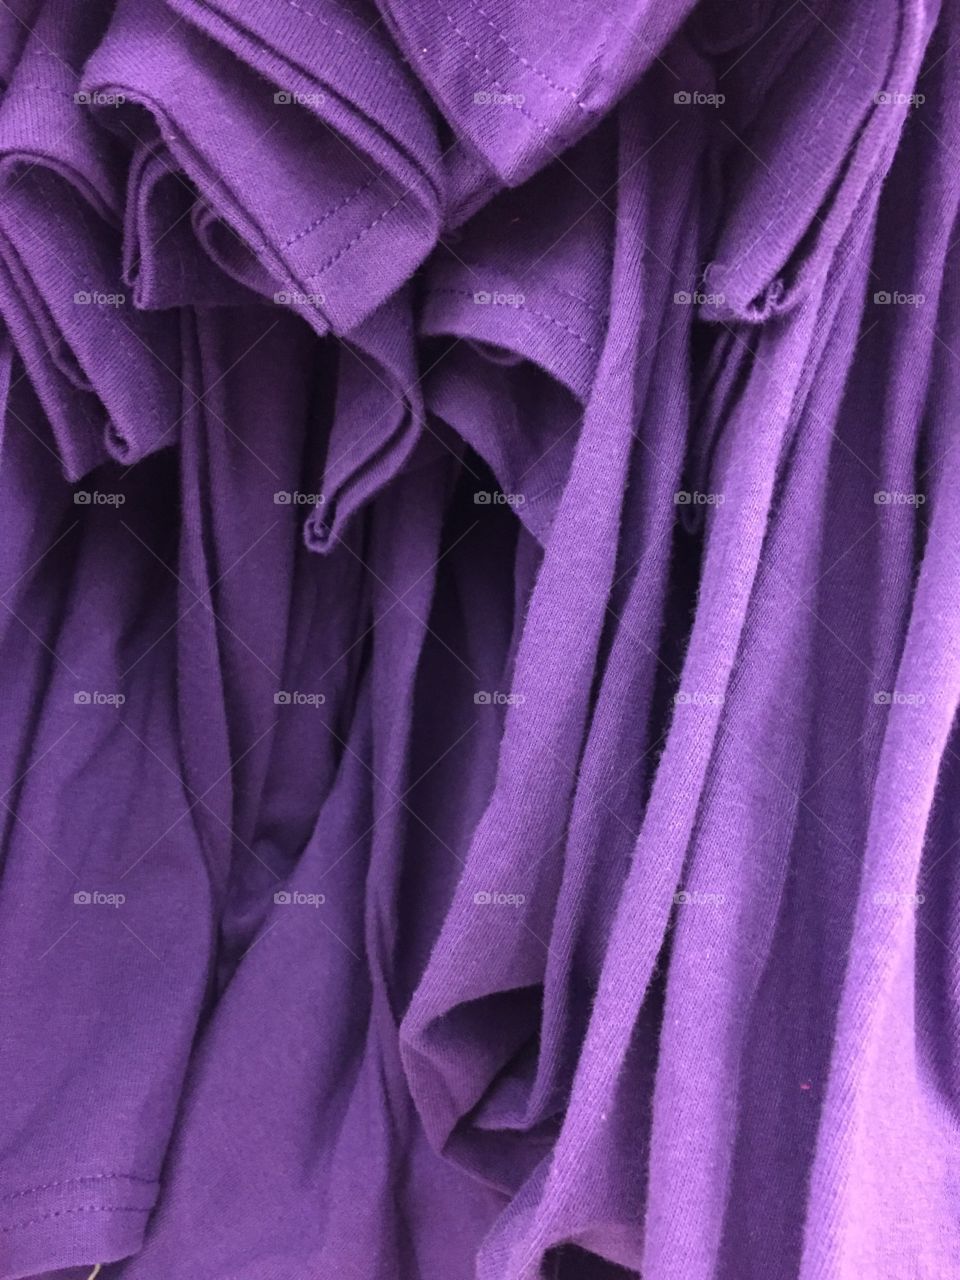 Full frame of purple curtain